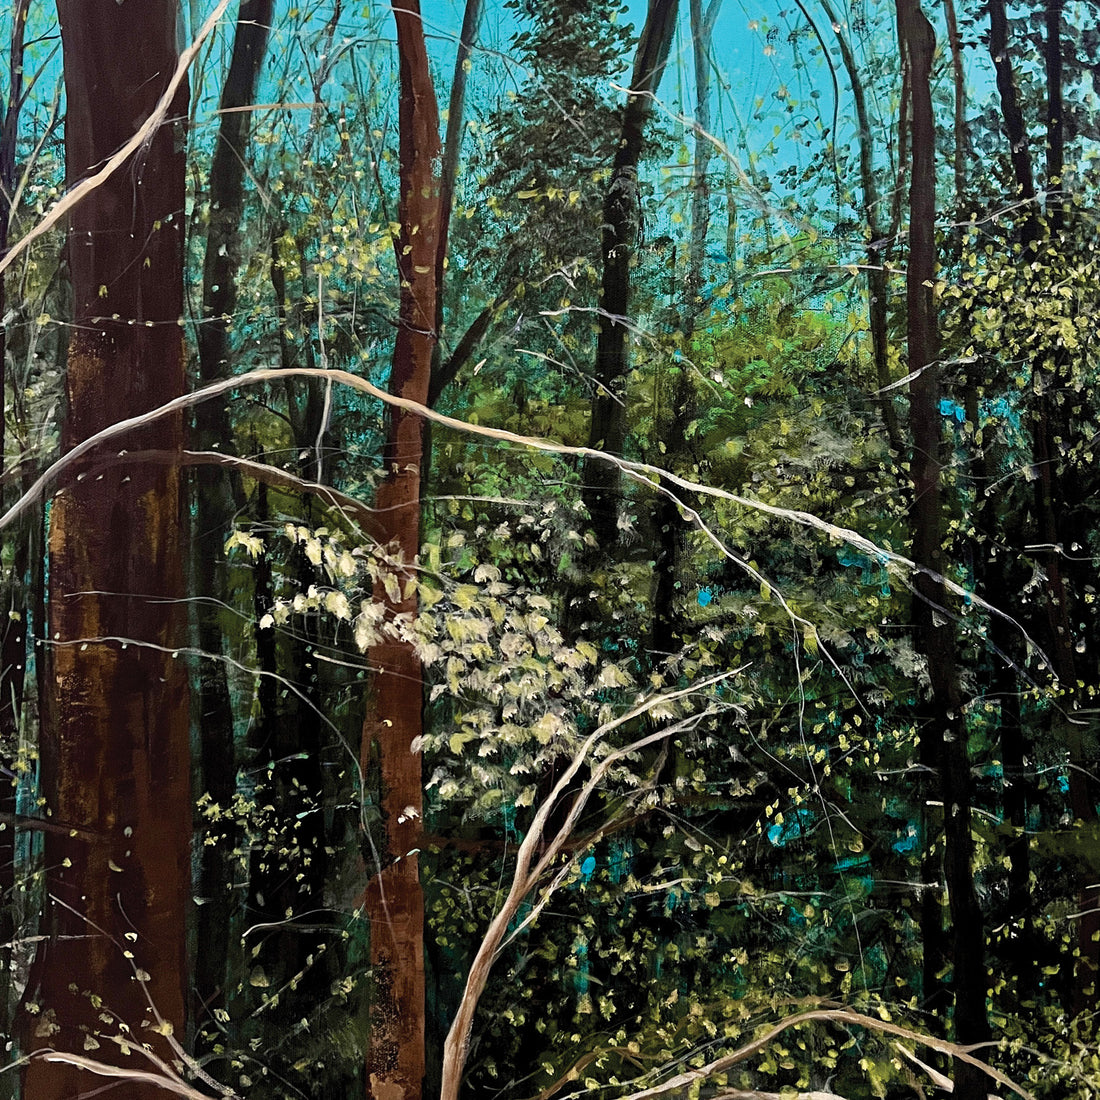 Melanie Lefebvre "Revival" realism landscape painting Canadian Artist